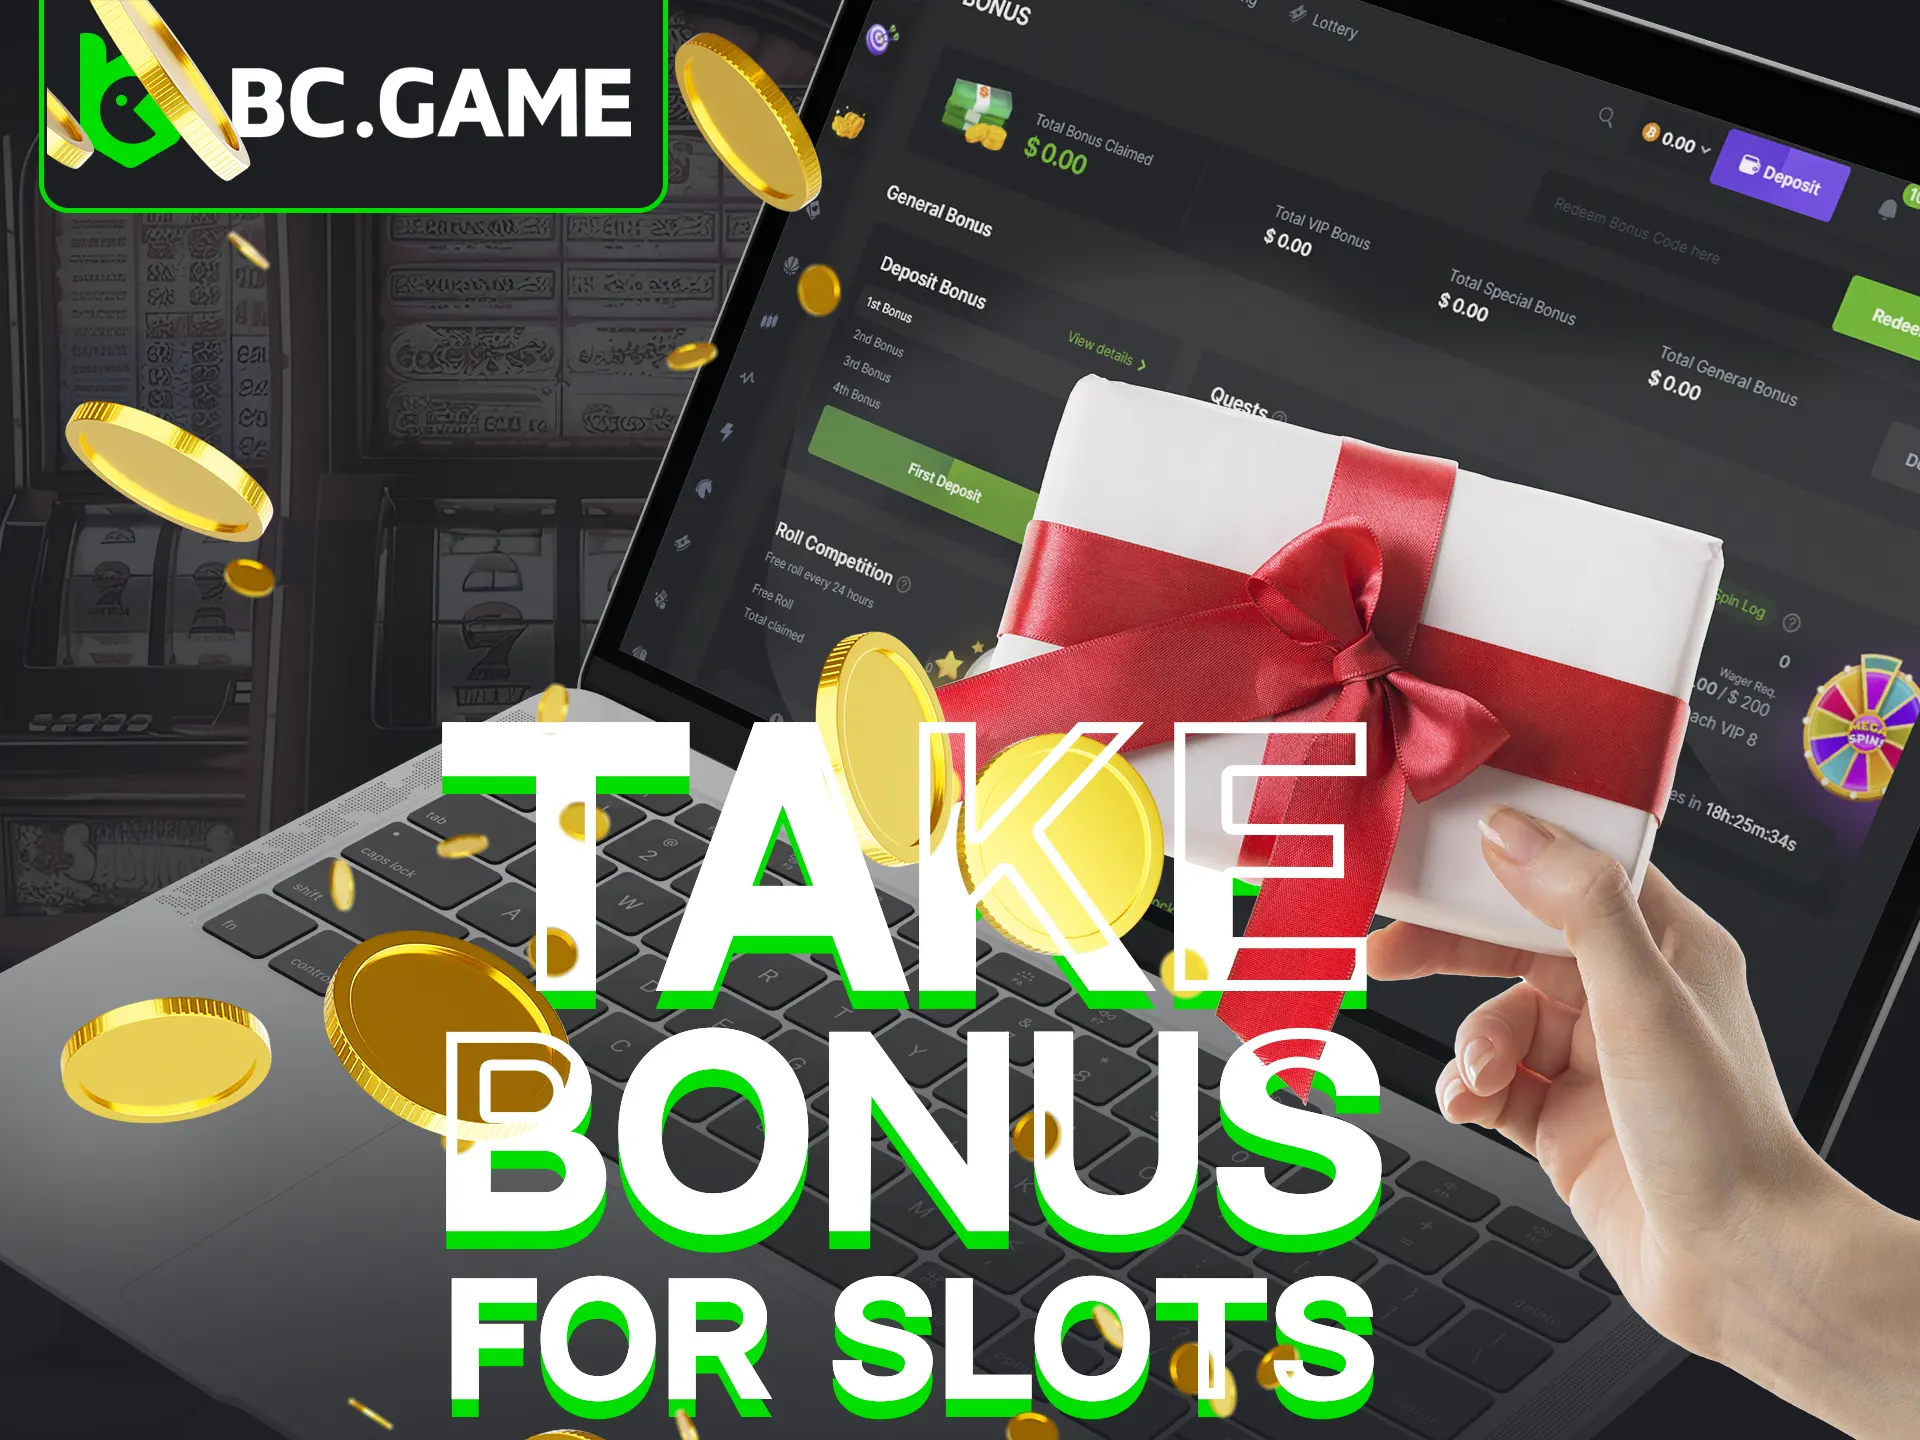 Get rewarding deposit bonuses for slots at BC Game.